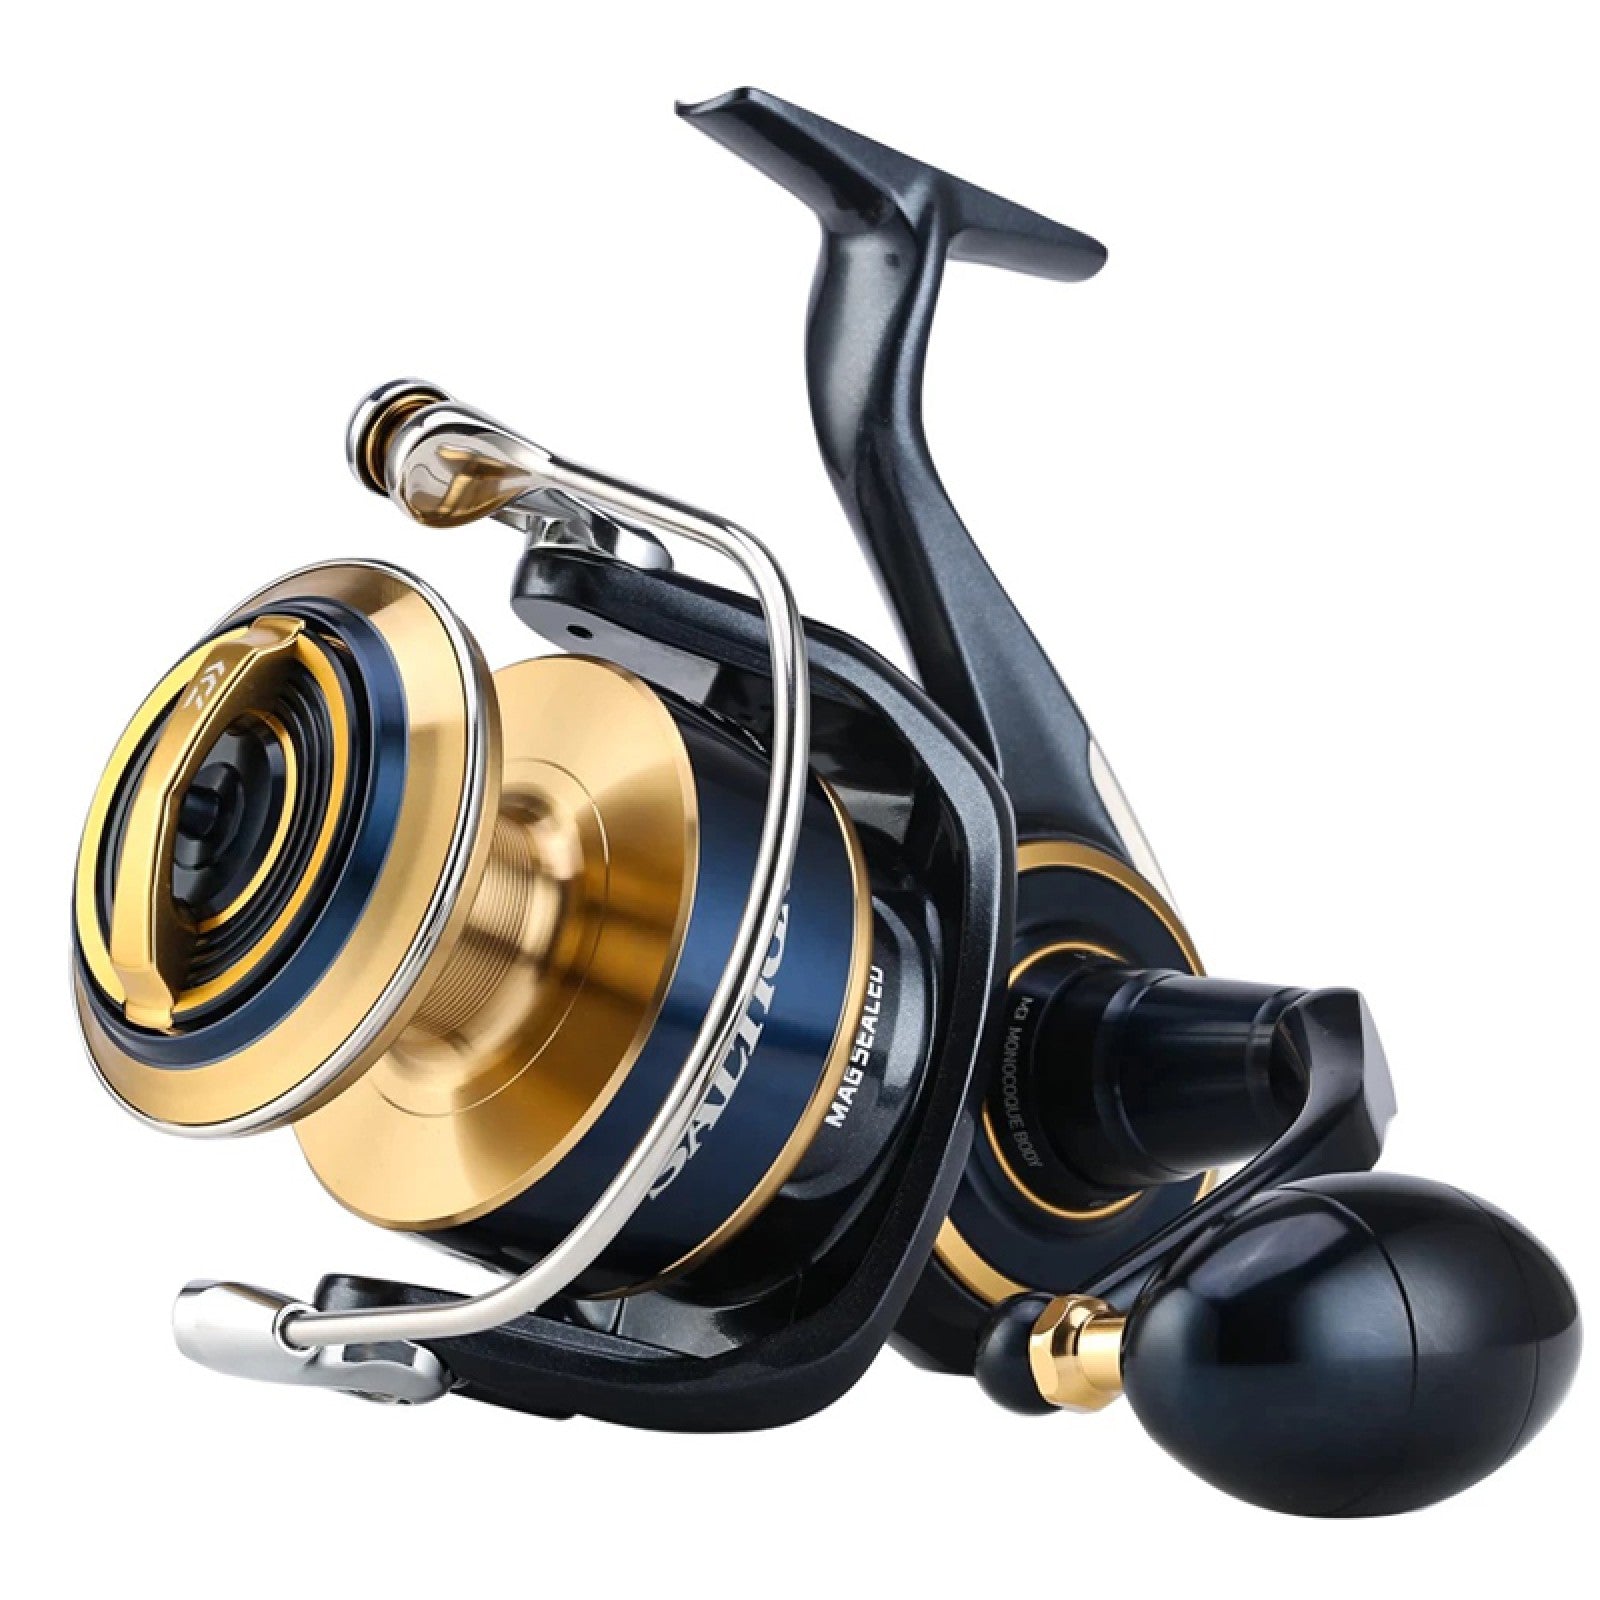 President XT Spinning Fishing Reel: Best Fishing Reels 2020 